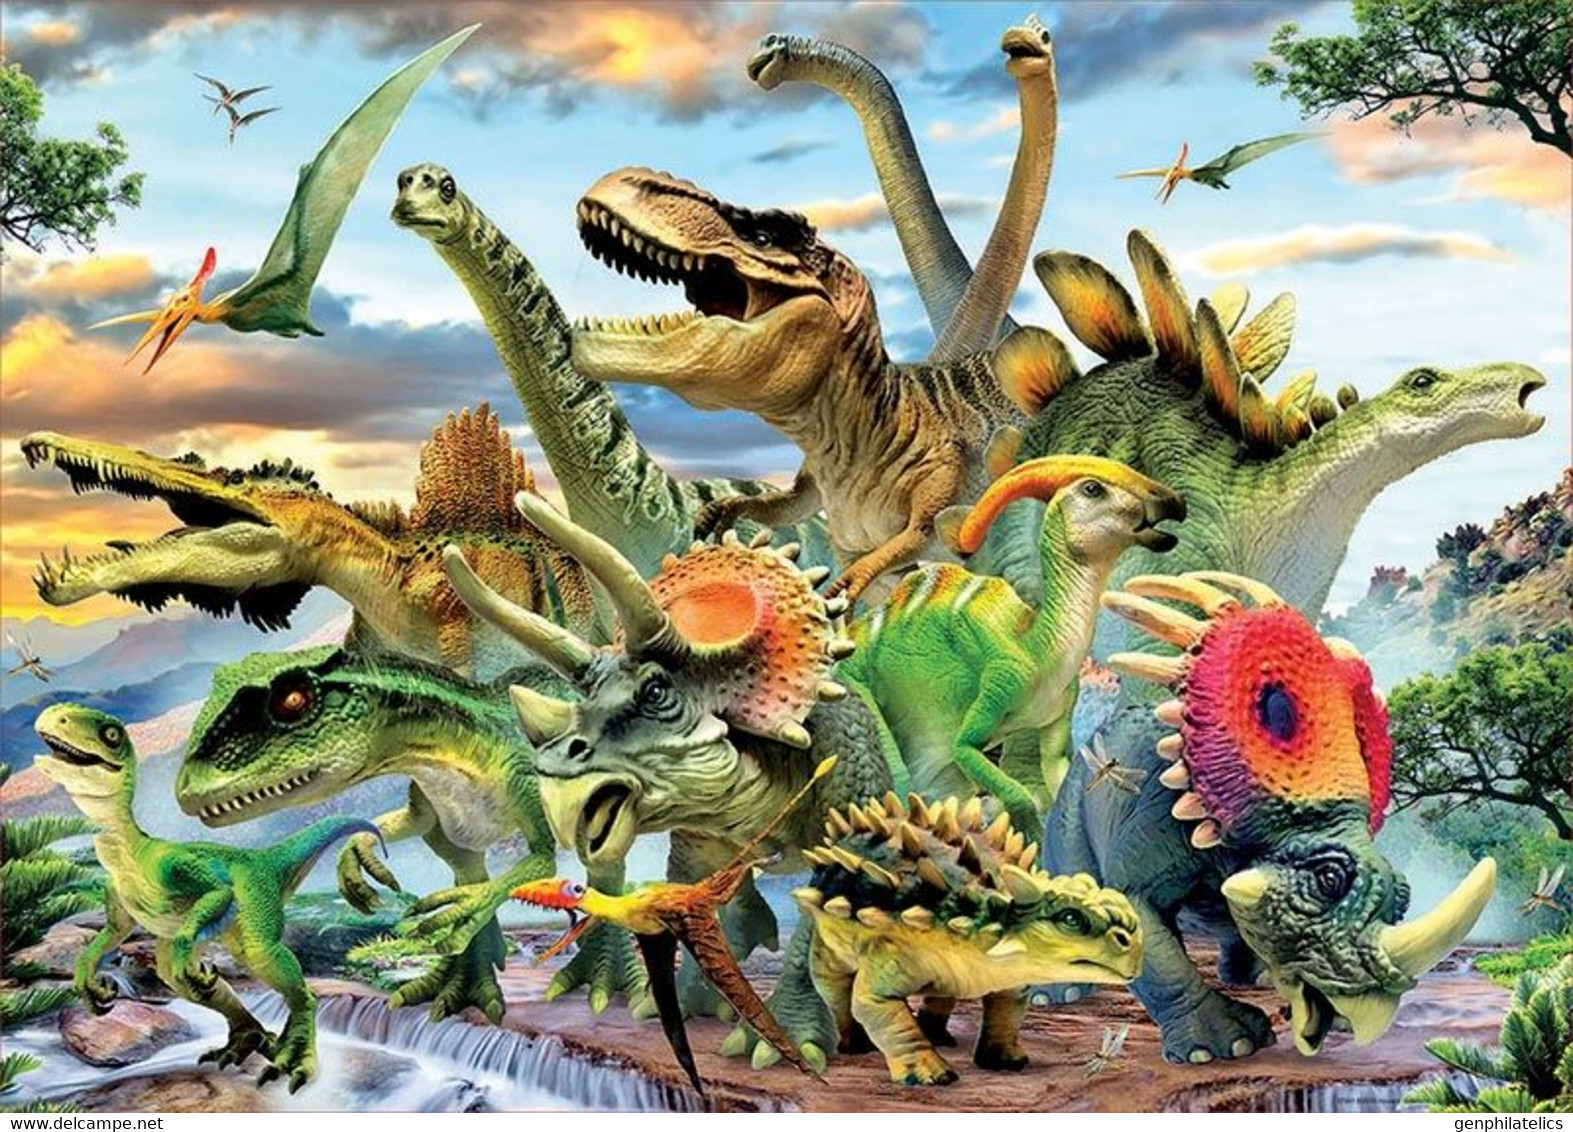 NEW Educa Jigsaw Puzzle 500 Pc Tiles Pieces "Dinosaurs" - Puzzles